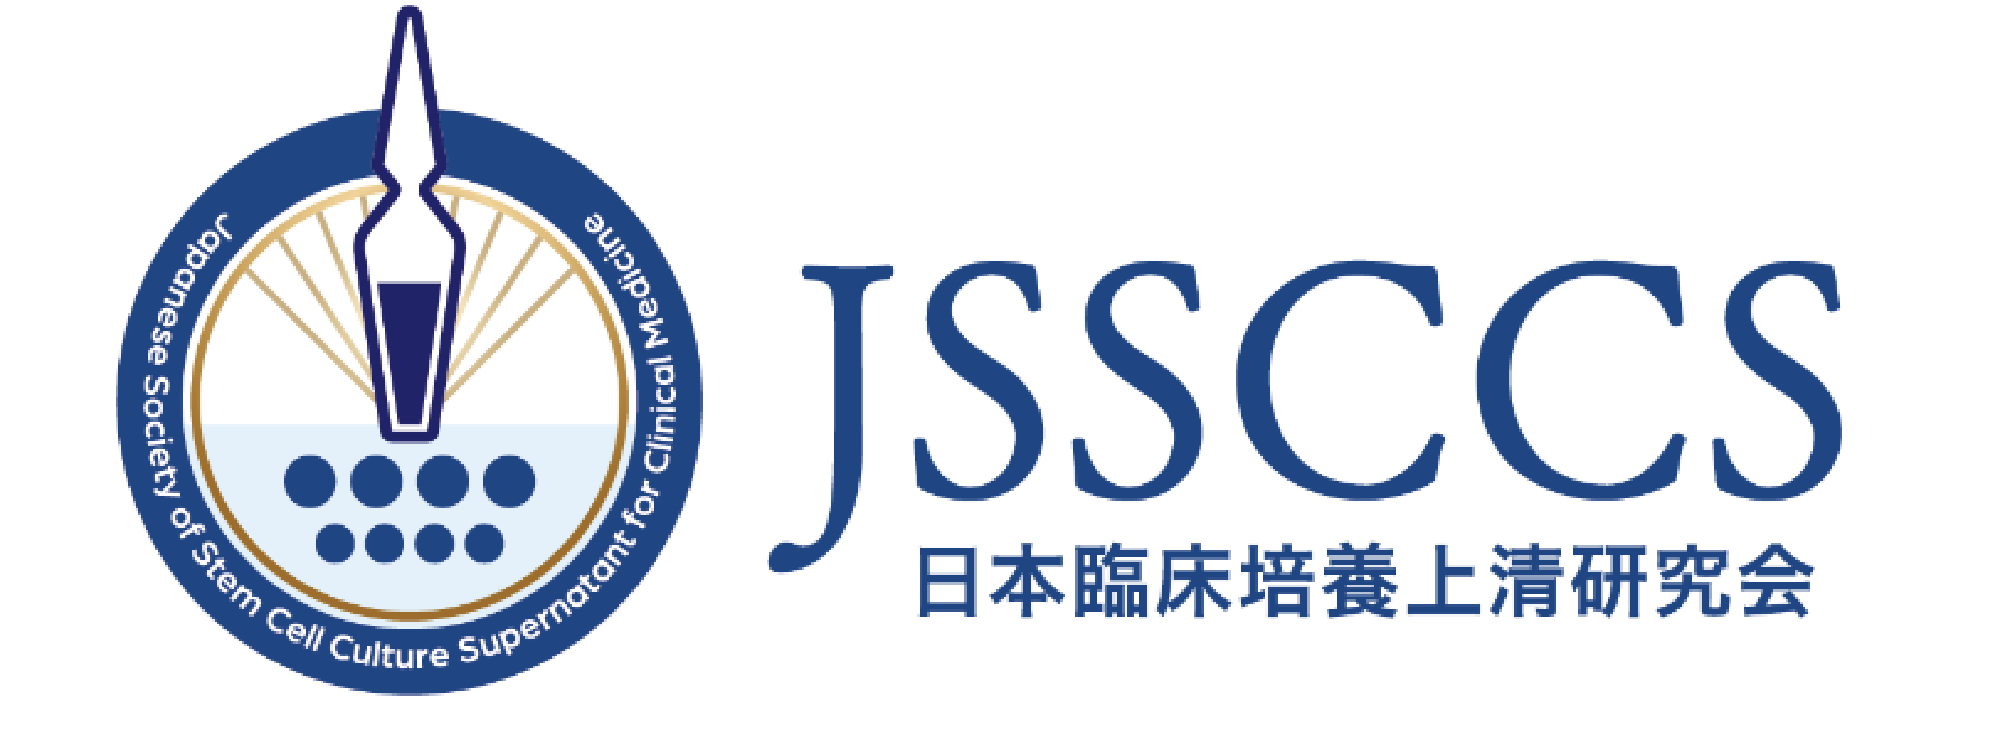 JSSCCS 日本臨床培養上清研究会